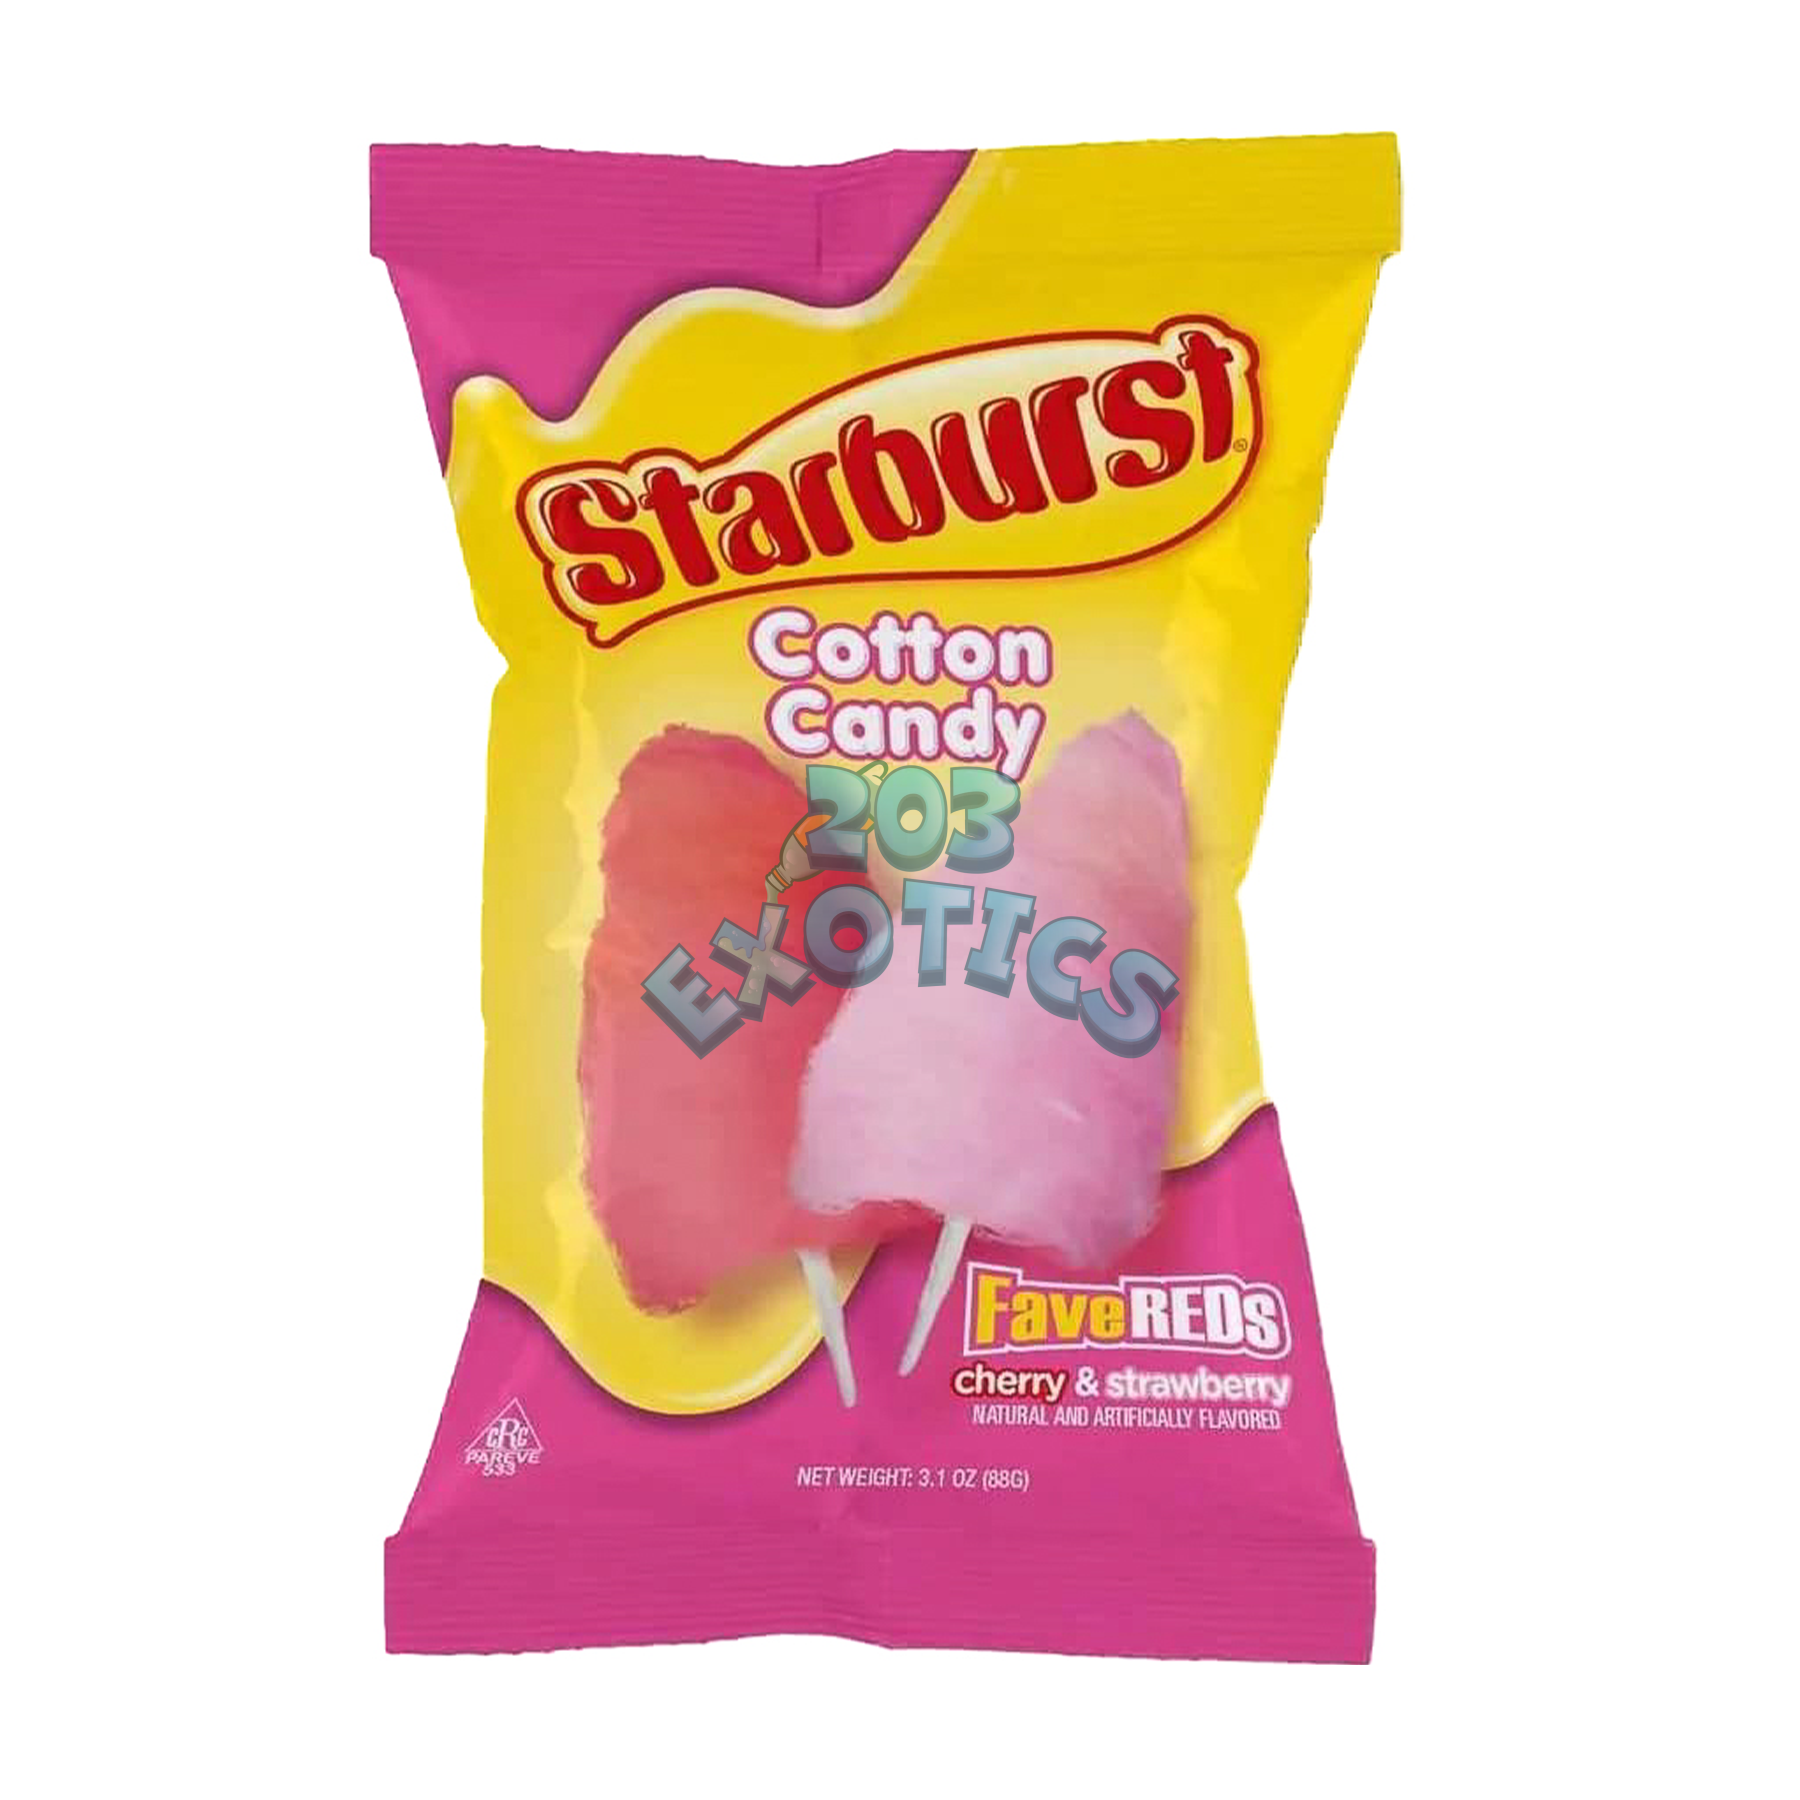 Starburst Favereds Cotton Candy